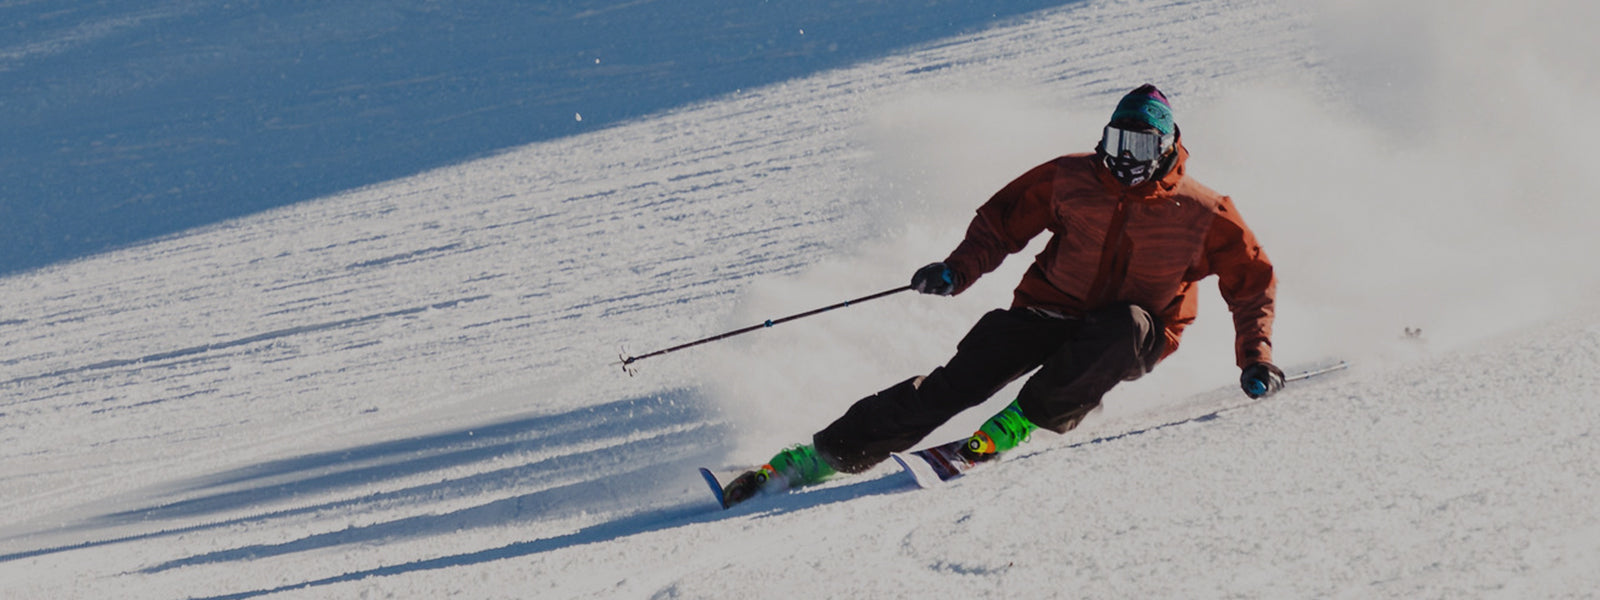 Socks for Snowsports header image, man skiing